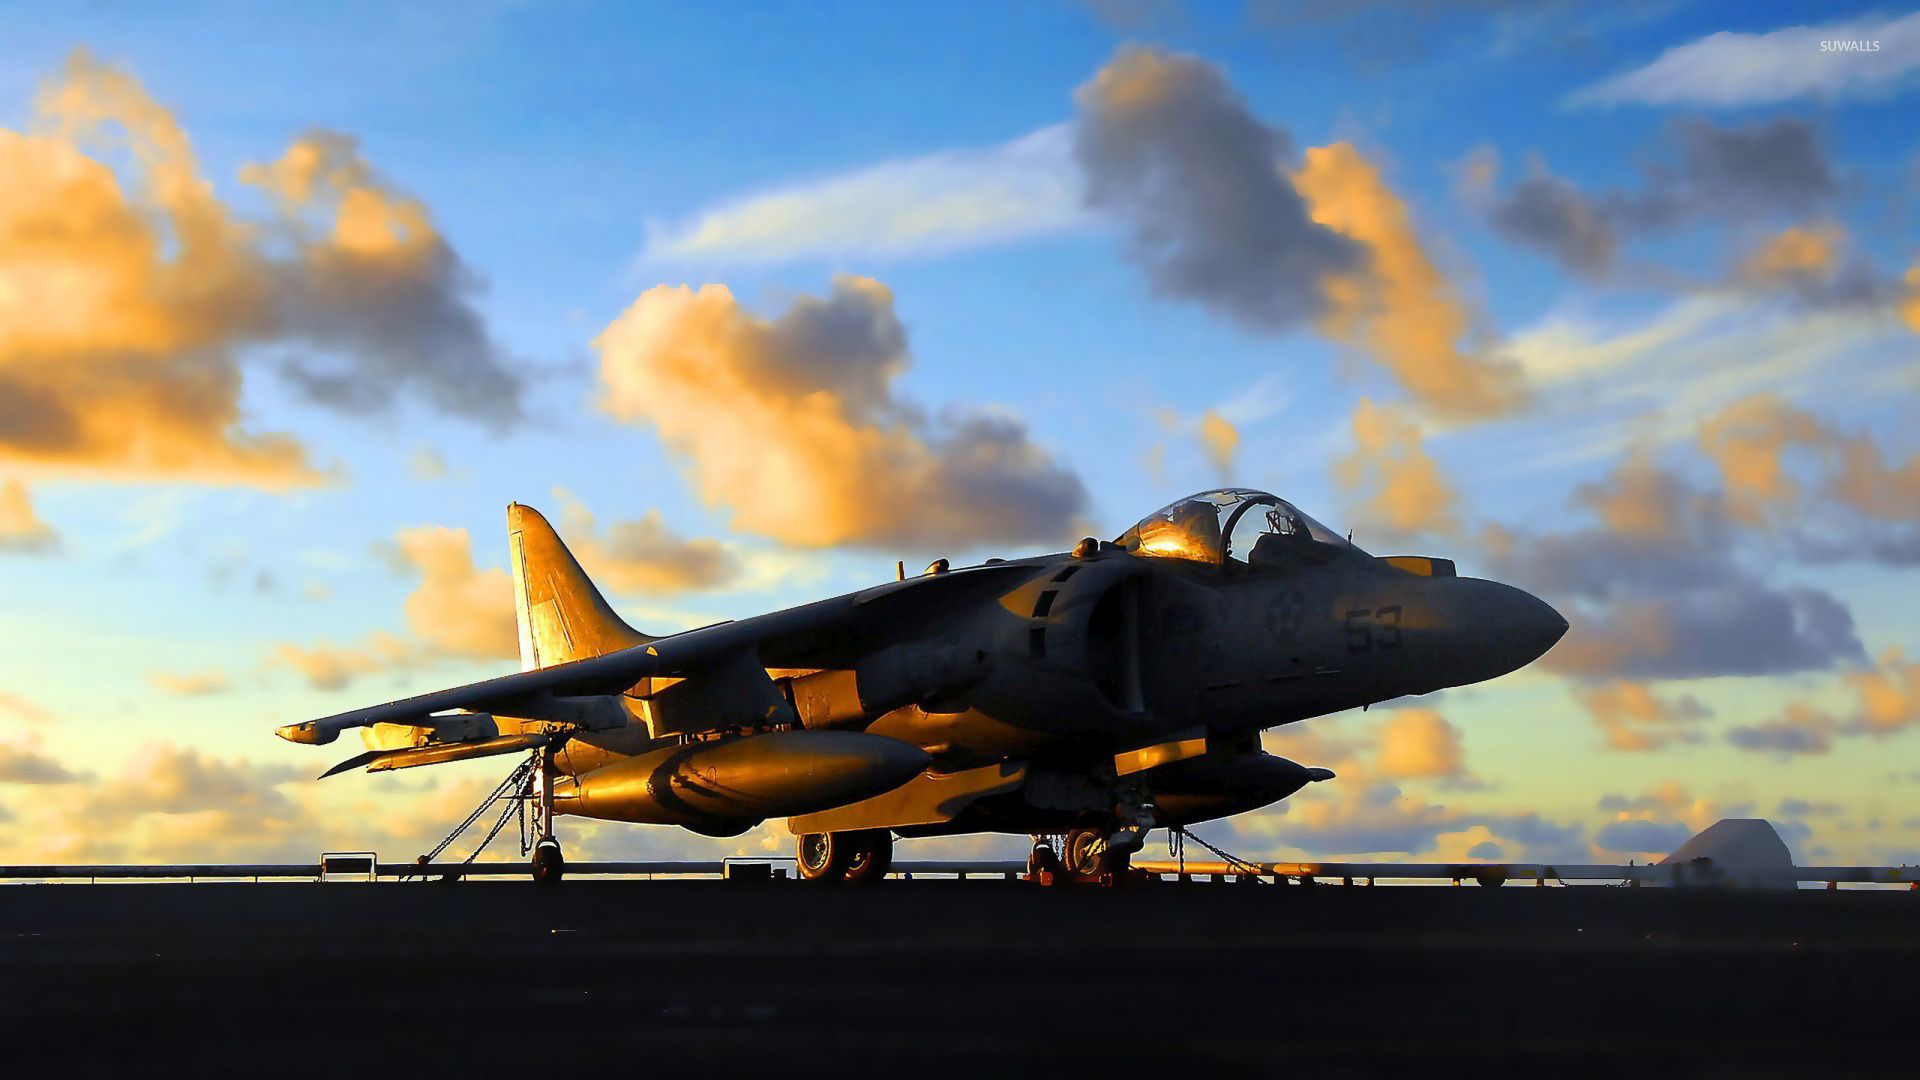 Sunset light reflecting on a Harrier Jump Jet wallpaper Wallpaper Flying Magazine